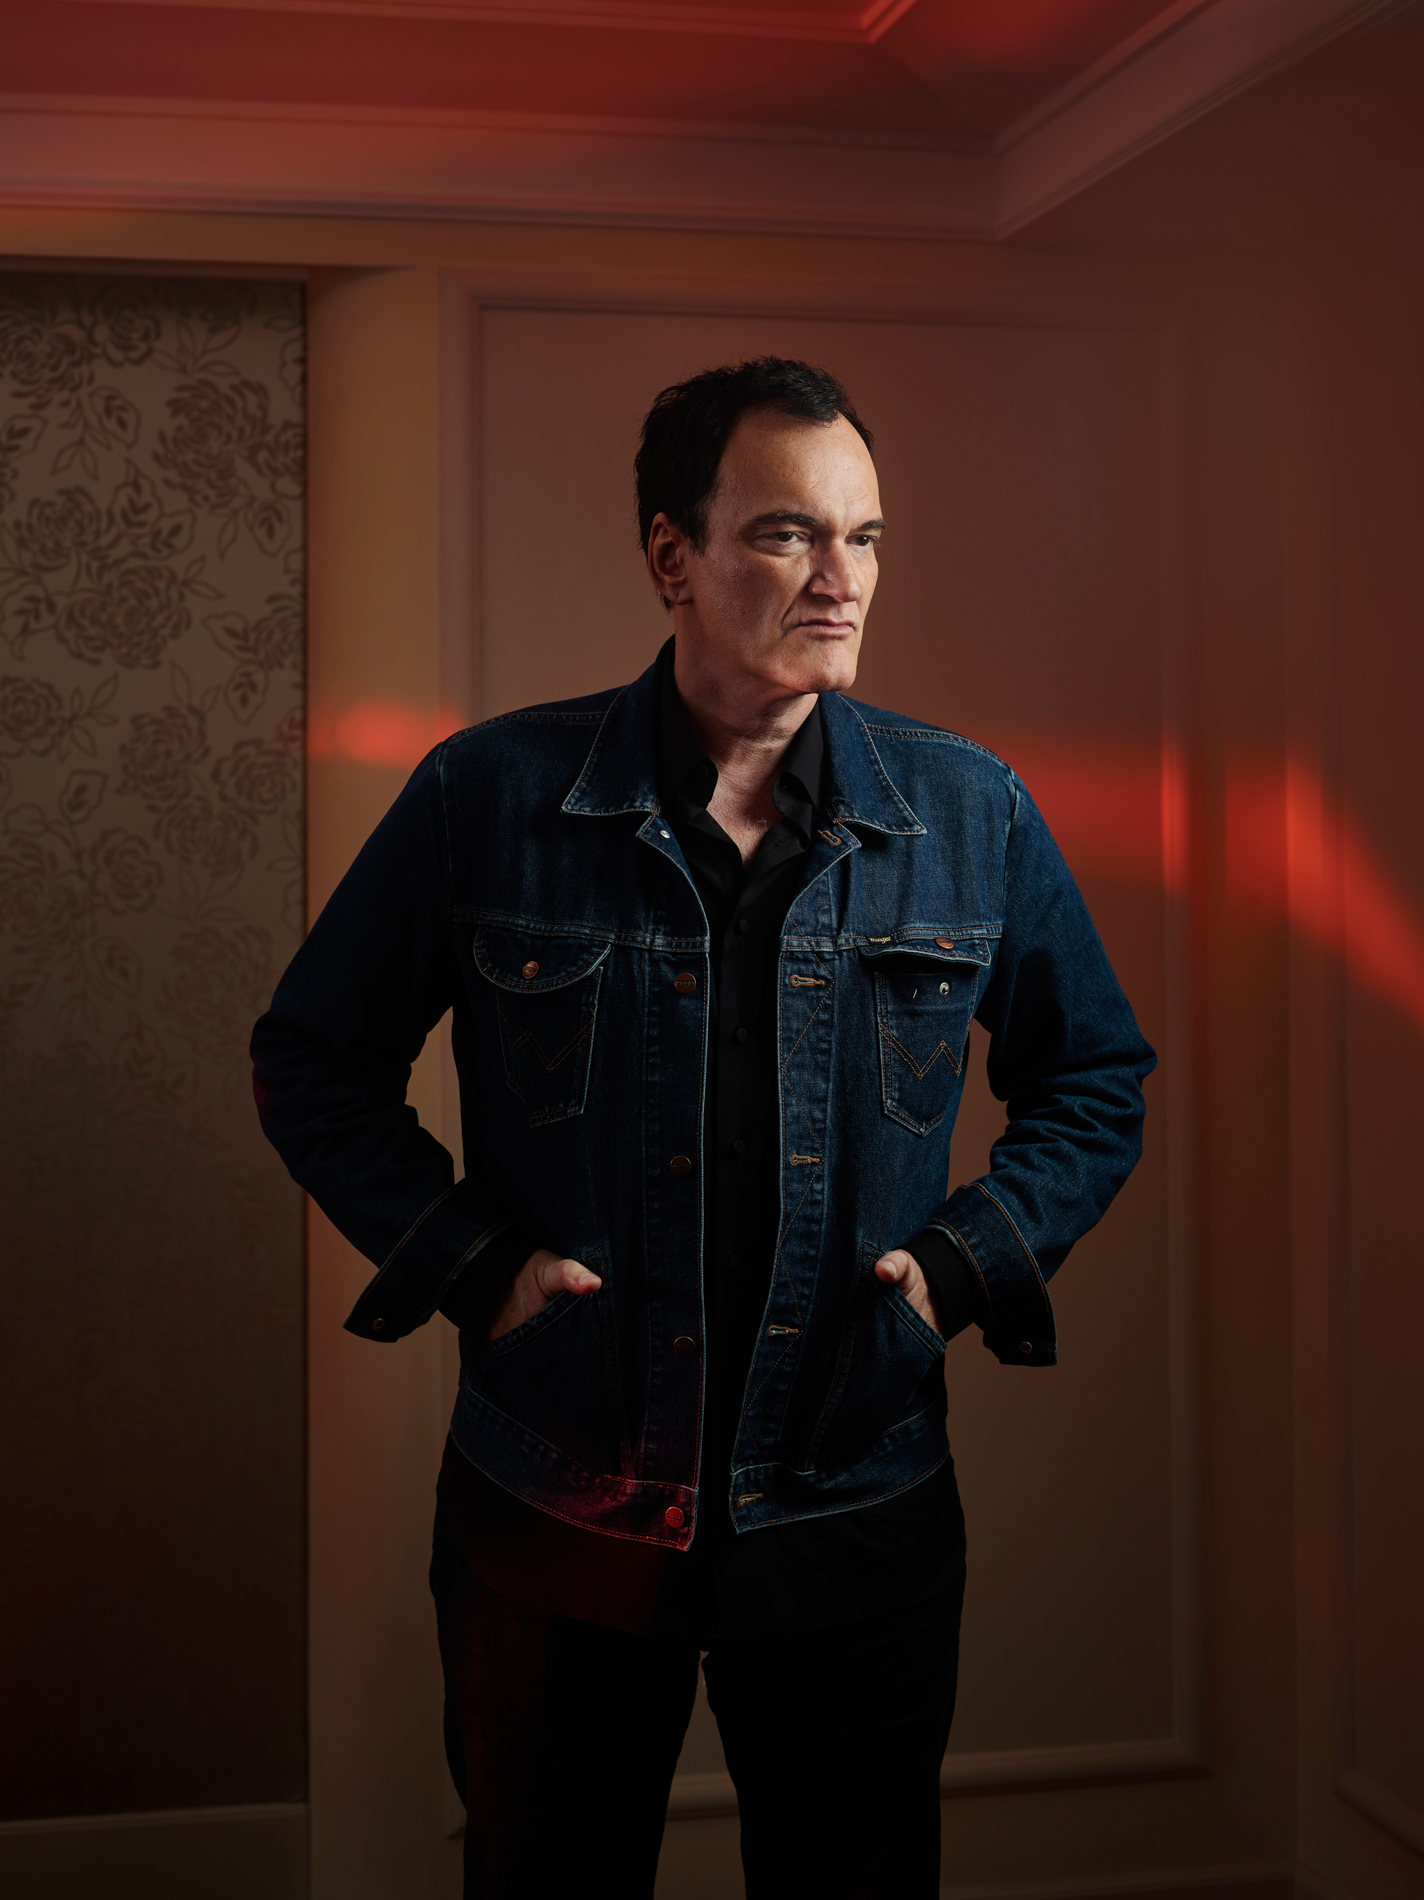 Quentin Tarantino for Le Monde